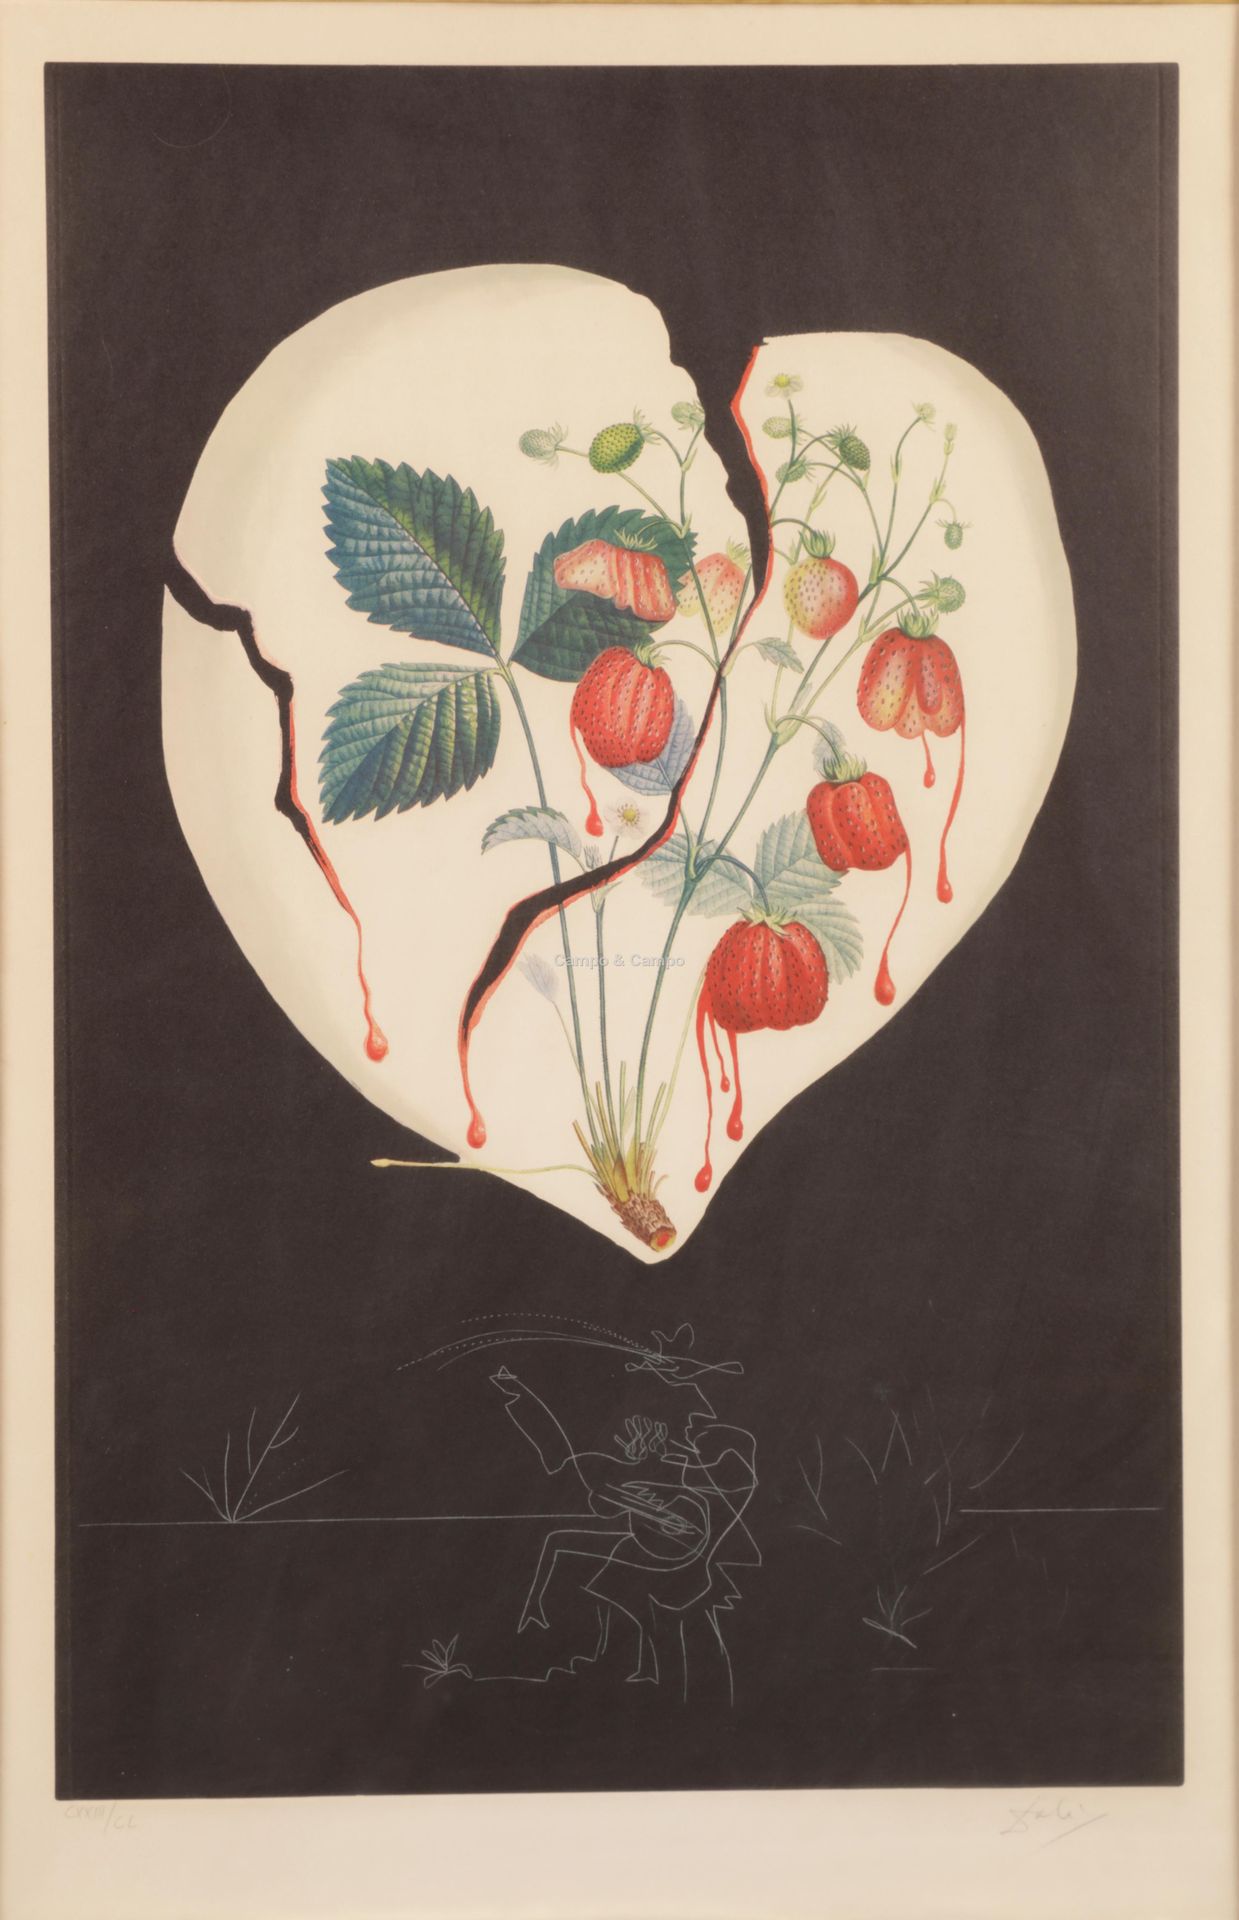 DALI Salvador 1904-1989 'Coeur de fraises'
Litho.
Get. Sig. (1970) 
Ex. CXXIII/C&hellip;